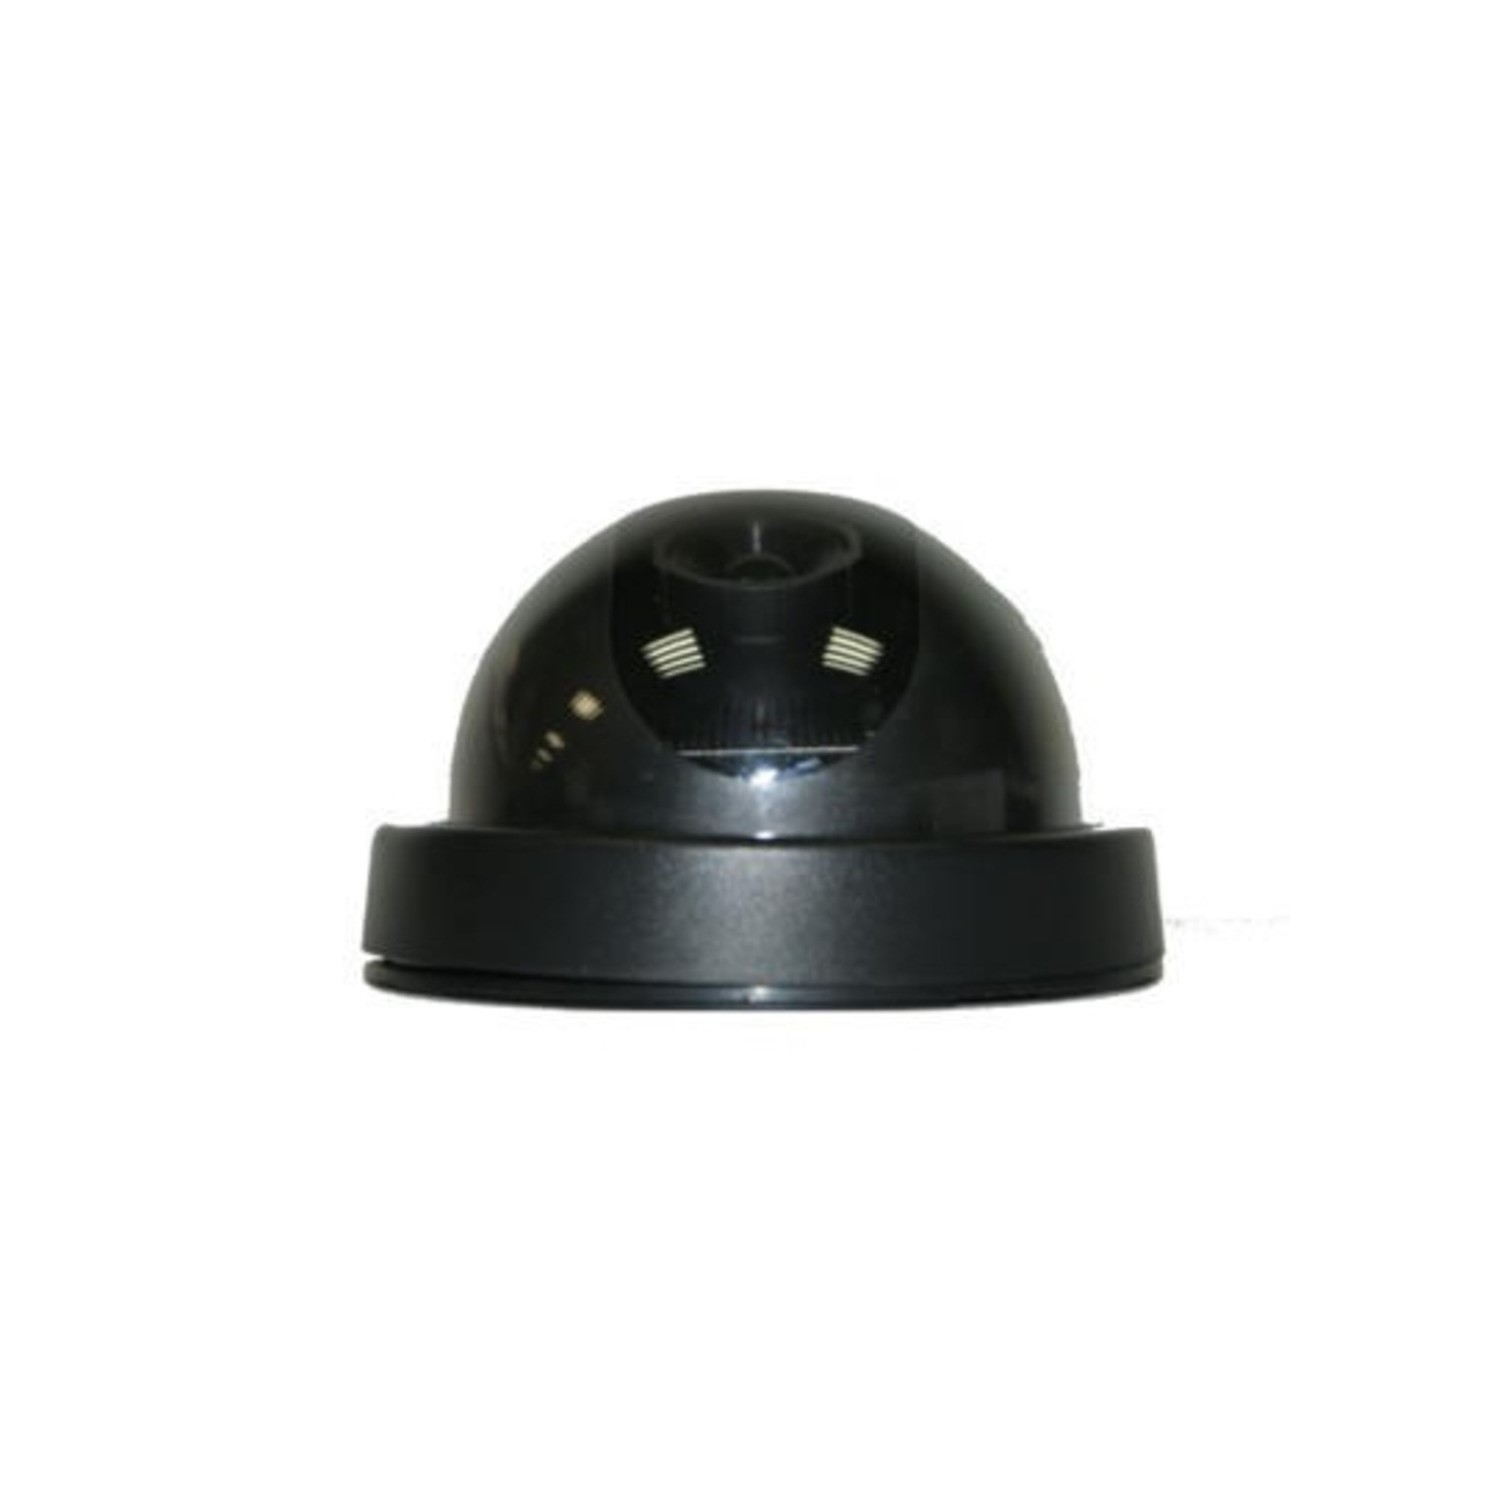 Internal Dummy Dome CCTV Camera Black